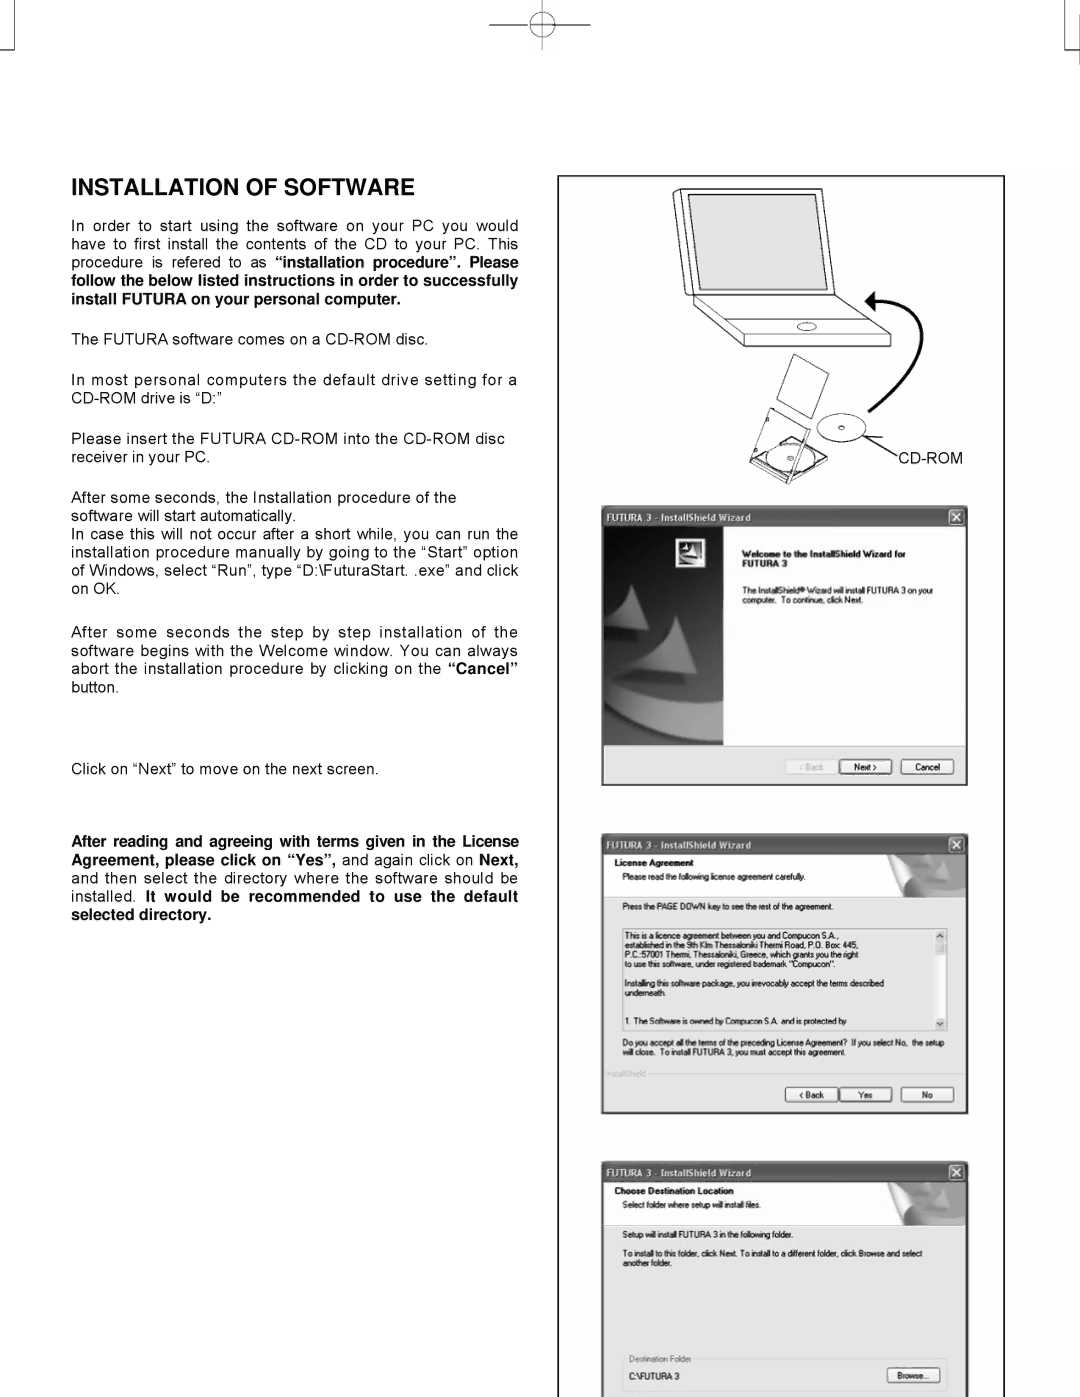 Singer CE-150 instruction manual Installation of Software, Cd-Rom 